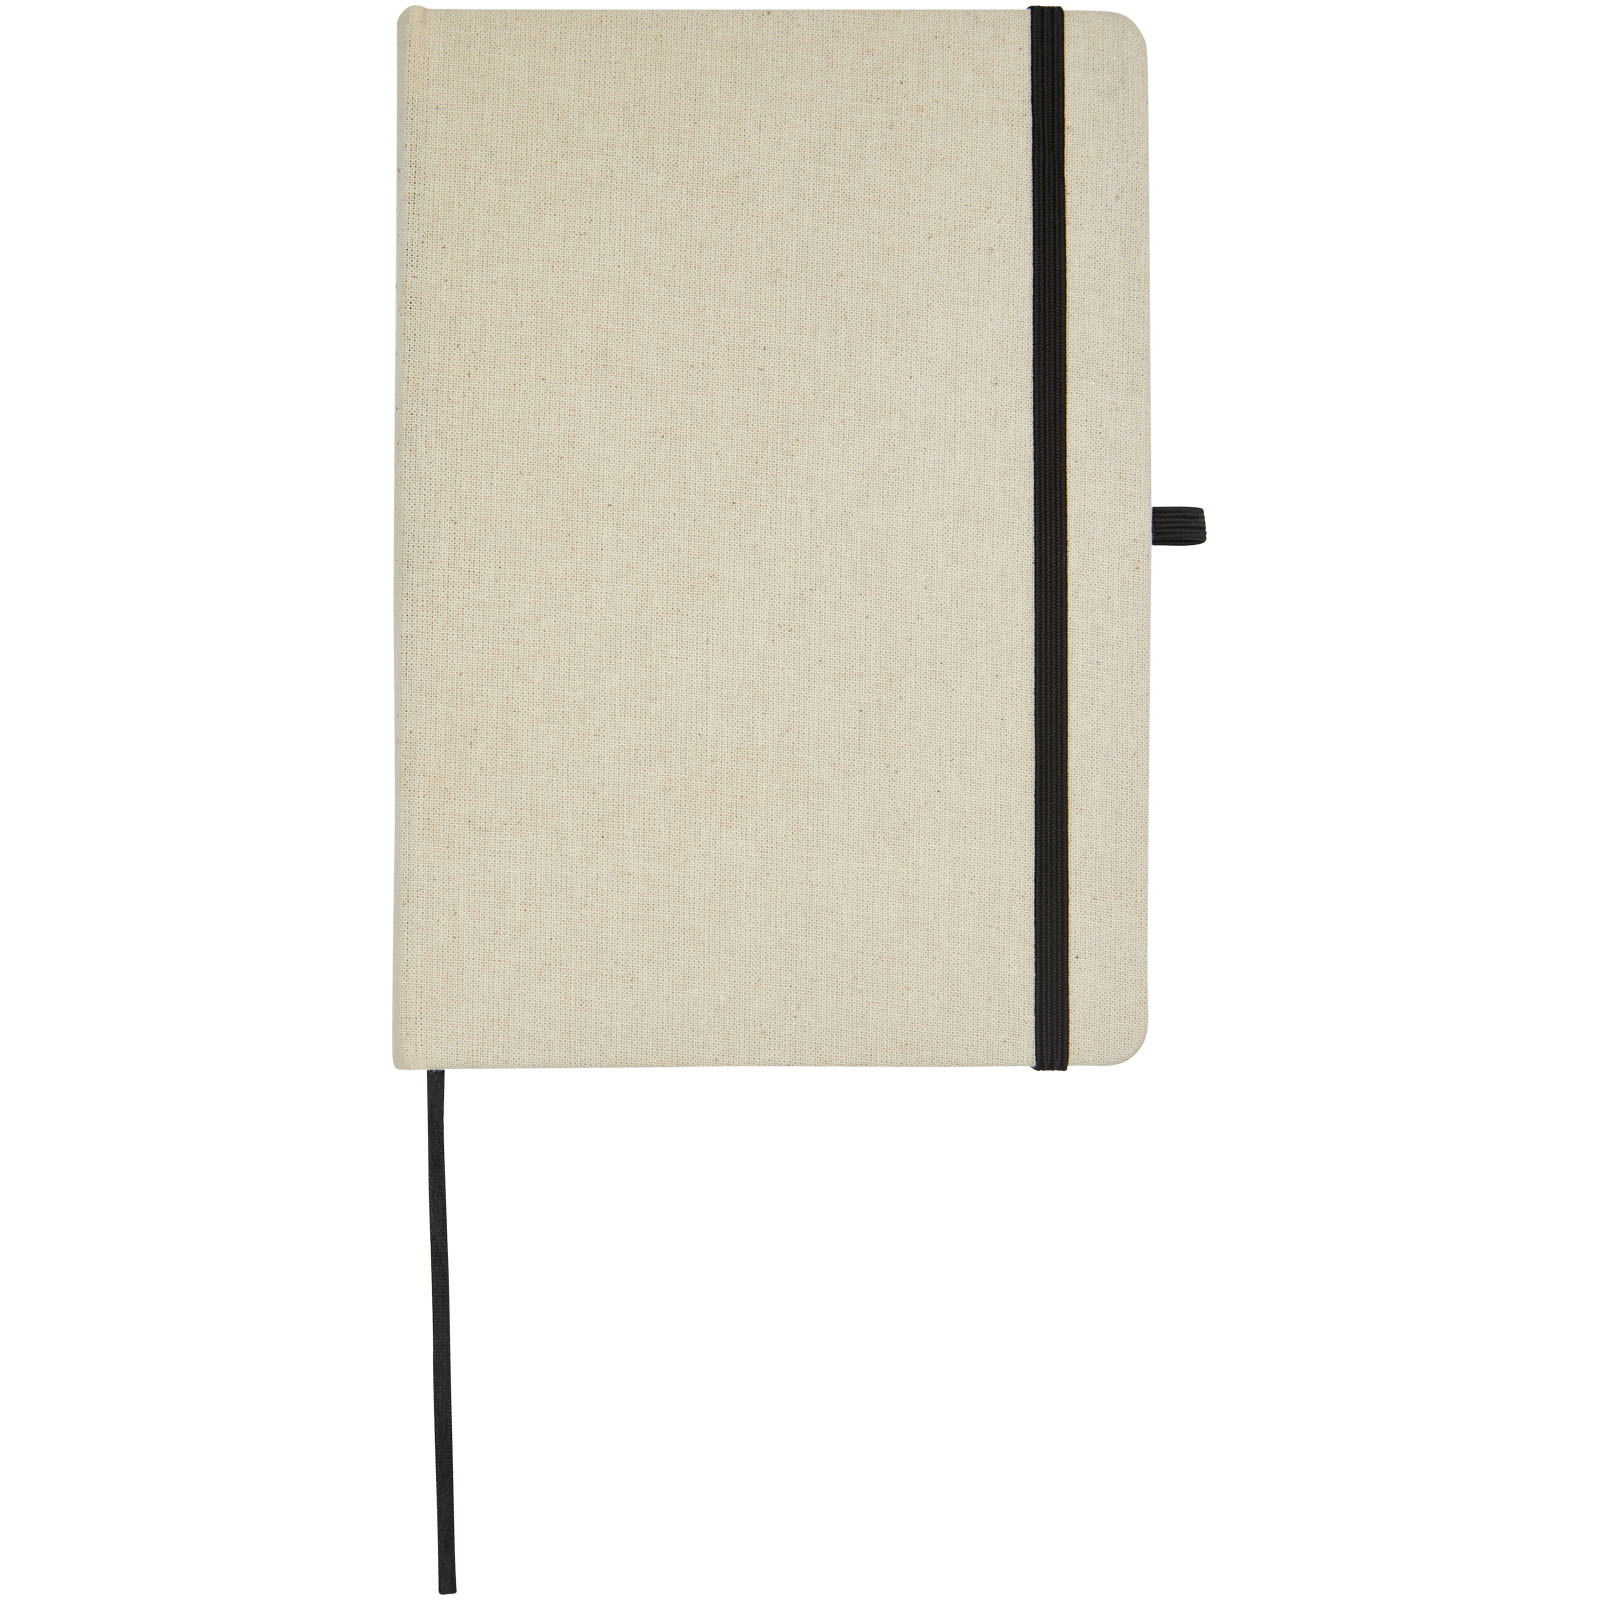 Advertising Hard cover notebooks - Tutico organic cotton hardcover notebook - 1